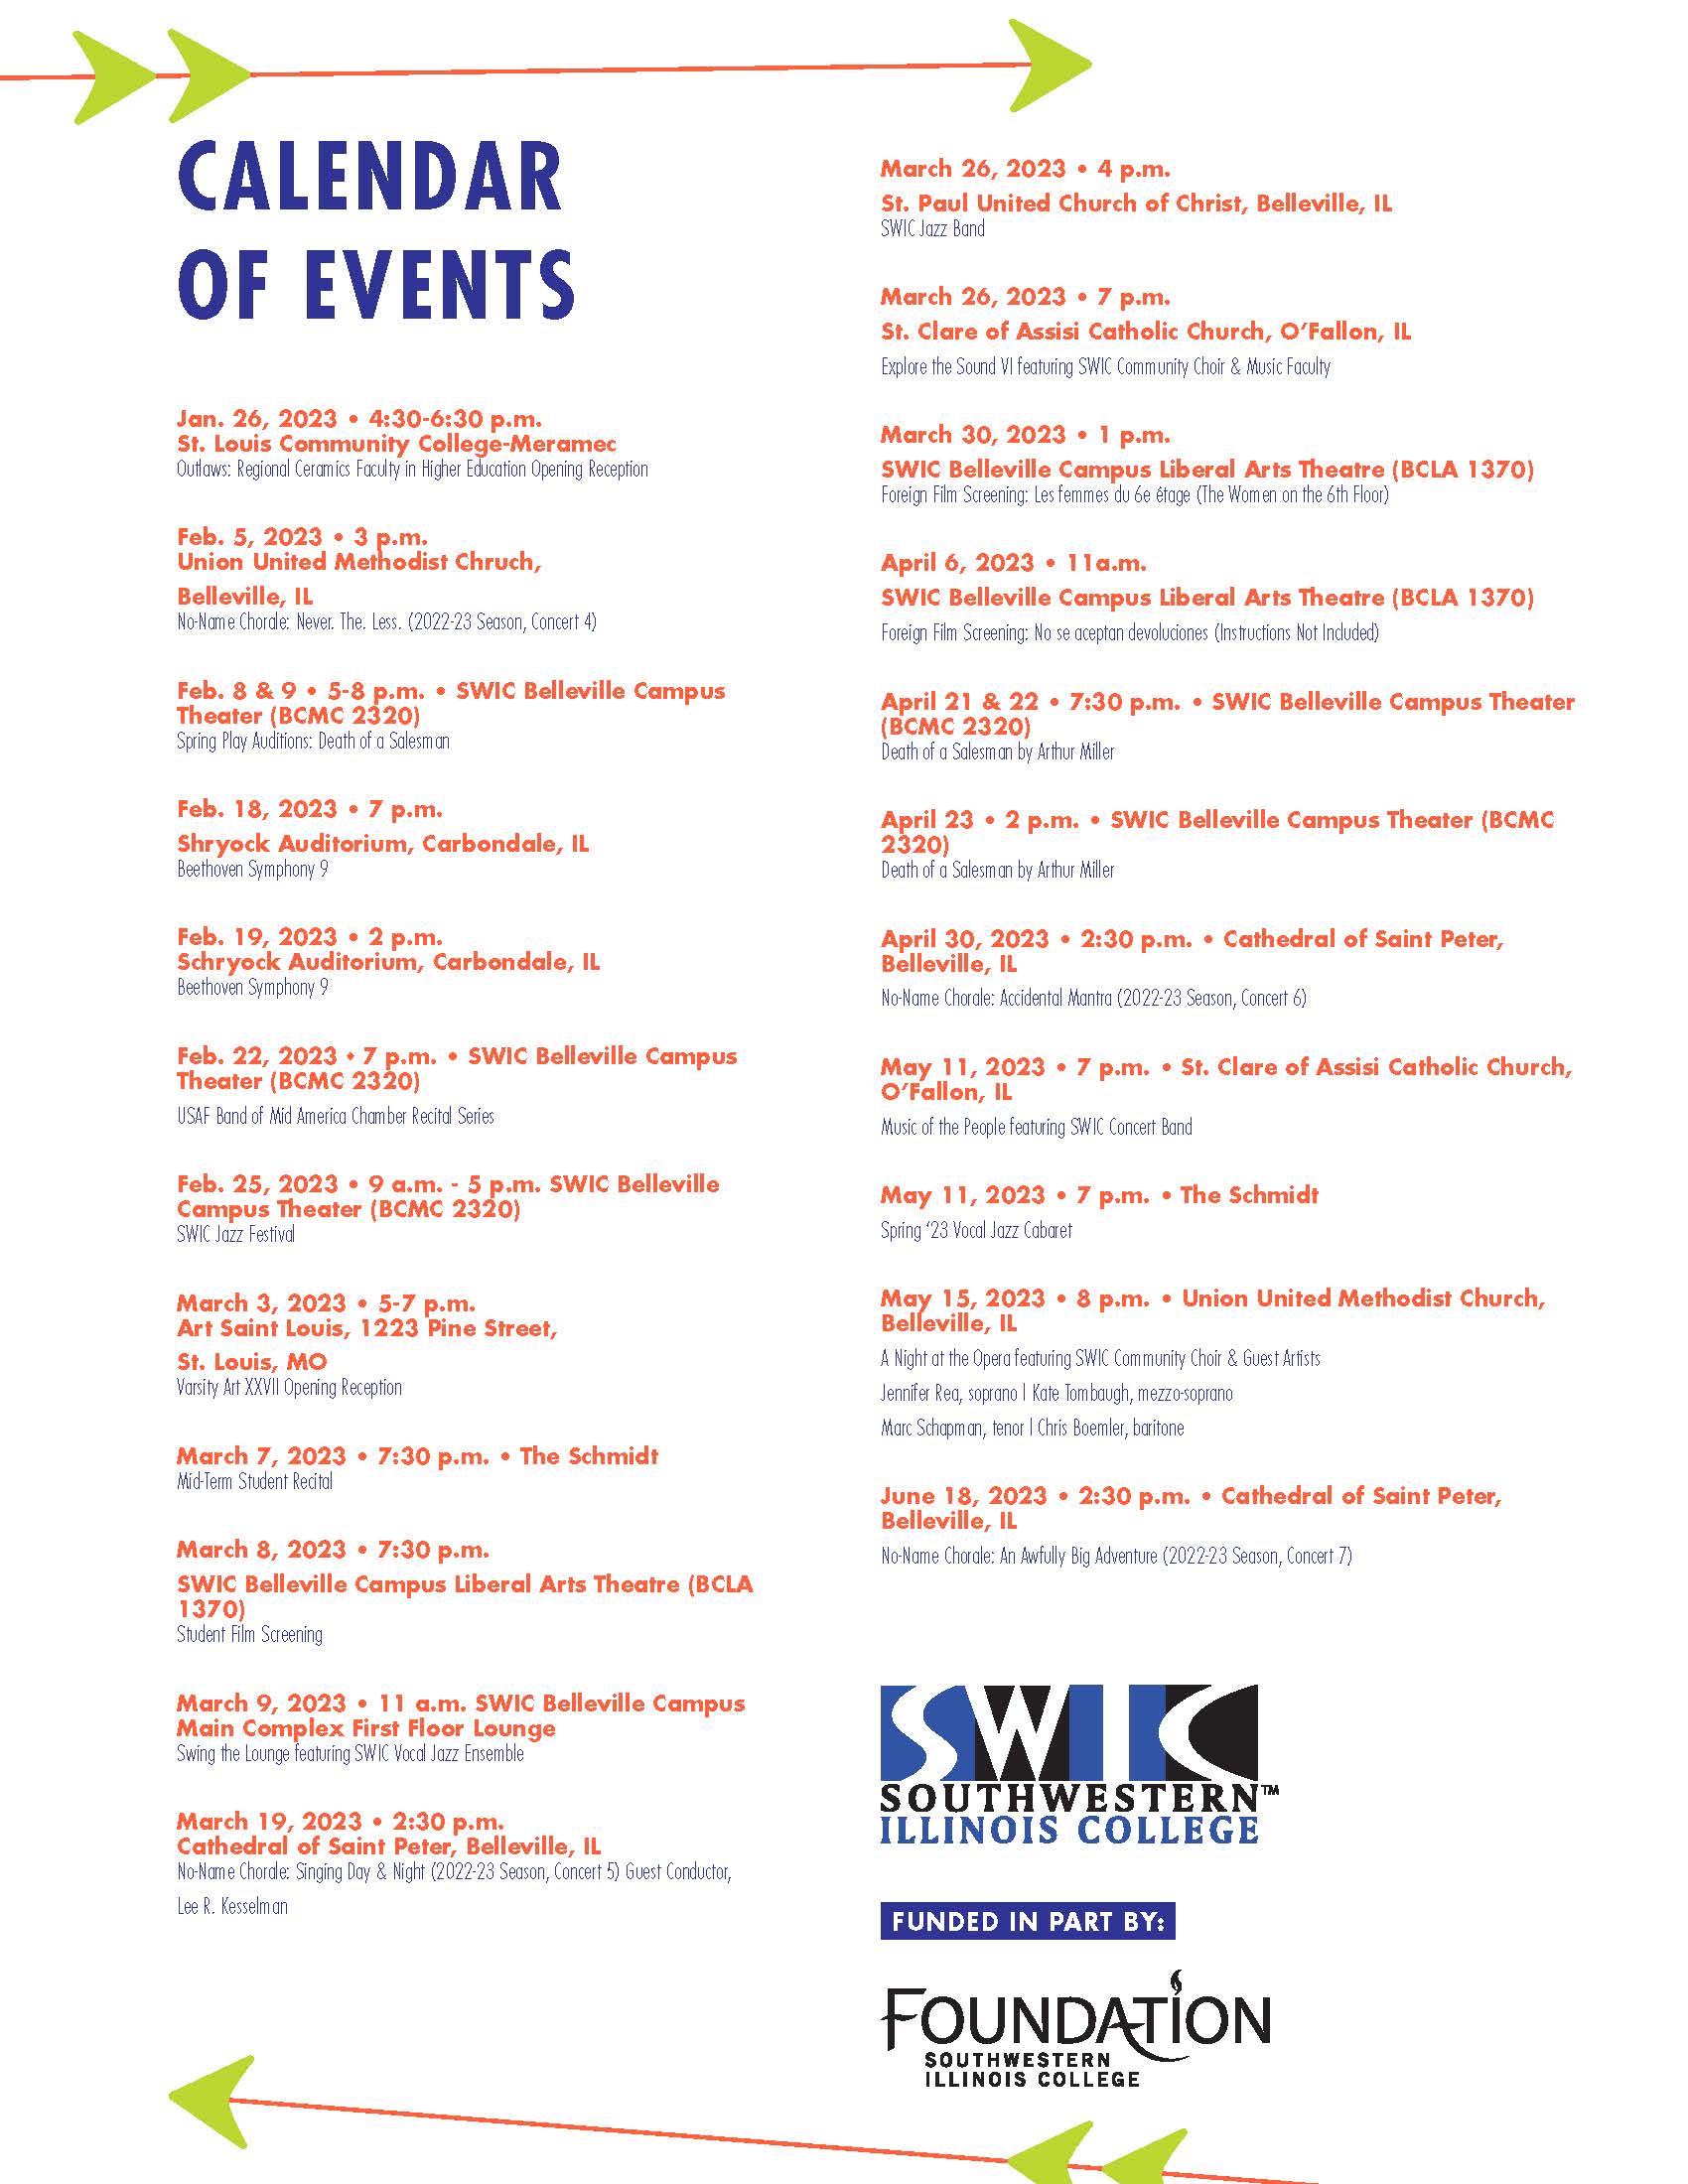 Foundation Calendar of SWIC Arts Events 2023